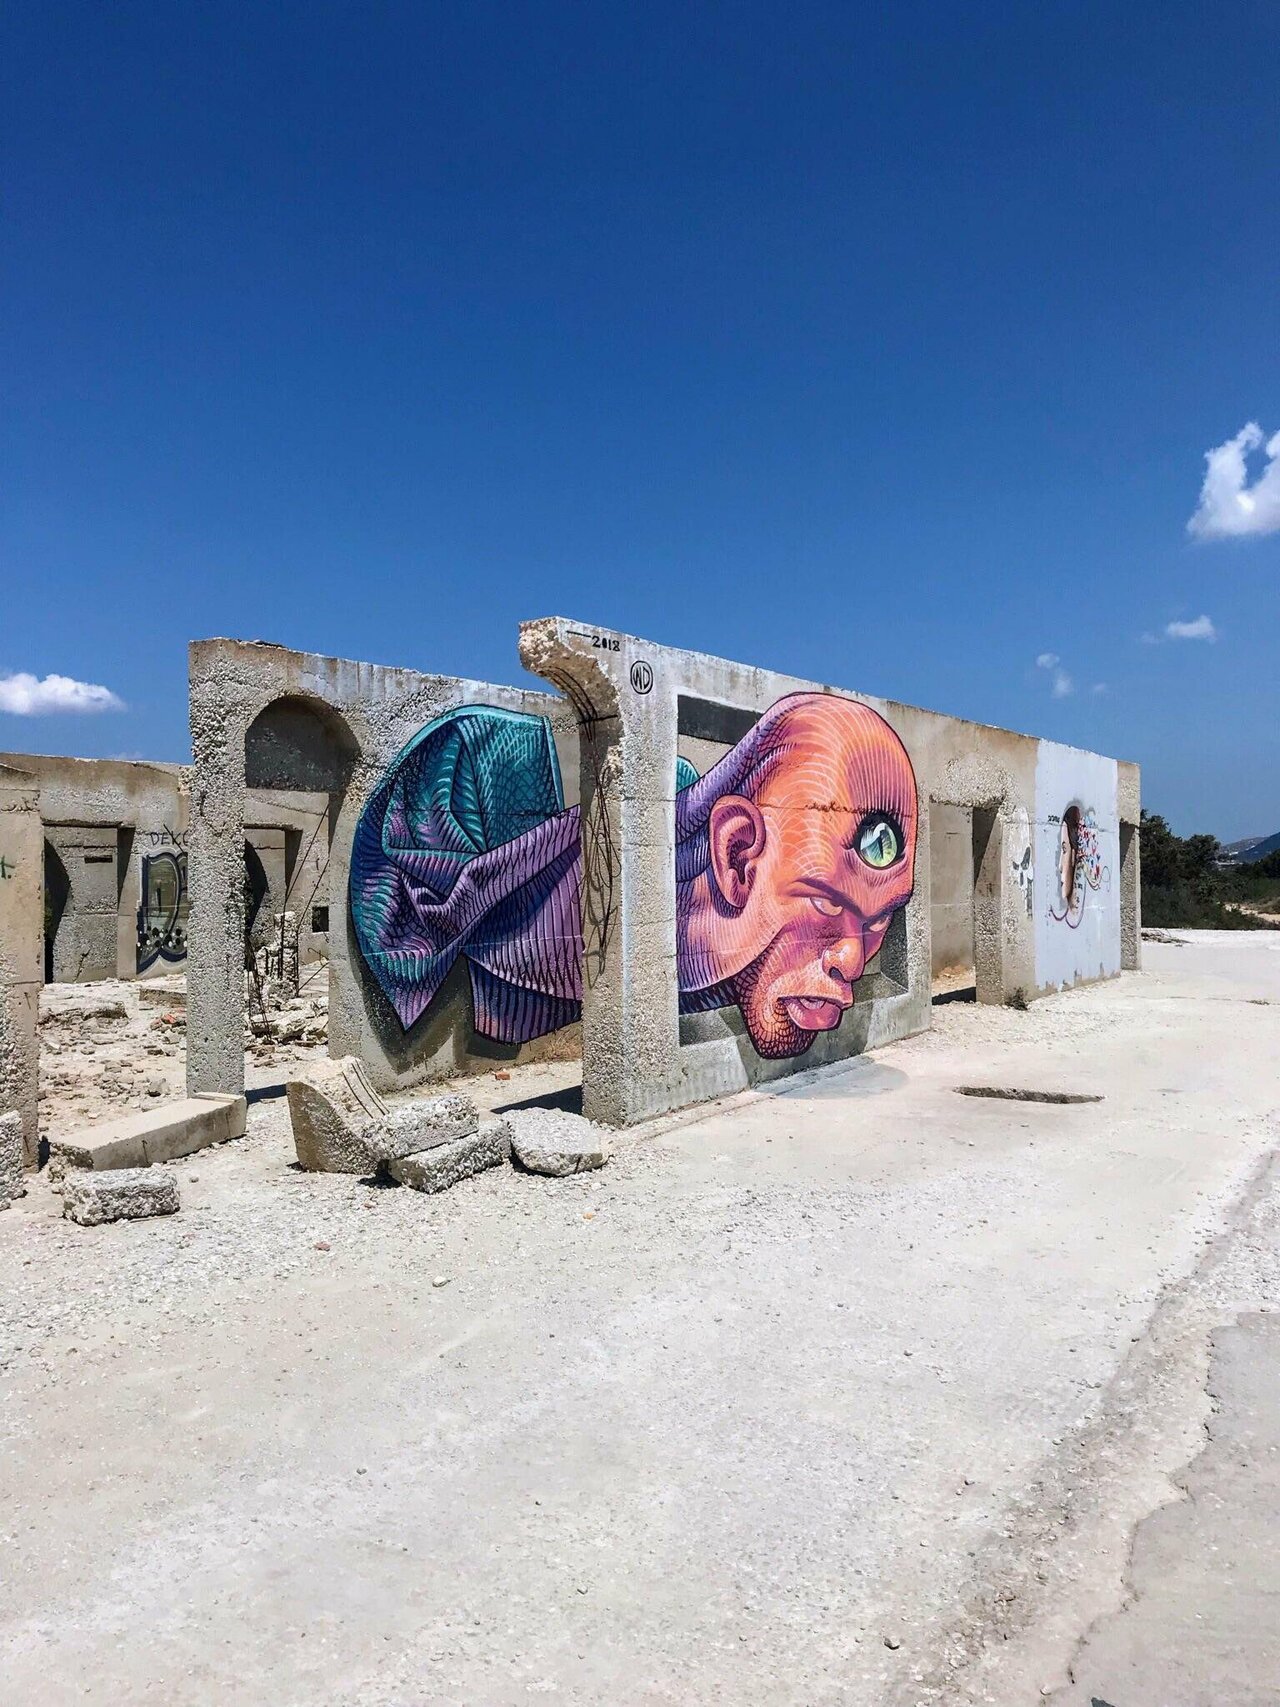 3D mural in Naxos, Greece Idk the artist #streetart #mural #graffiti #art https://t.co/q4BvsOJof4